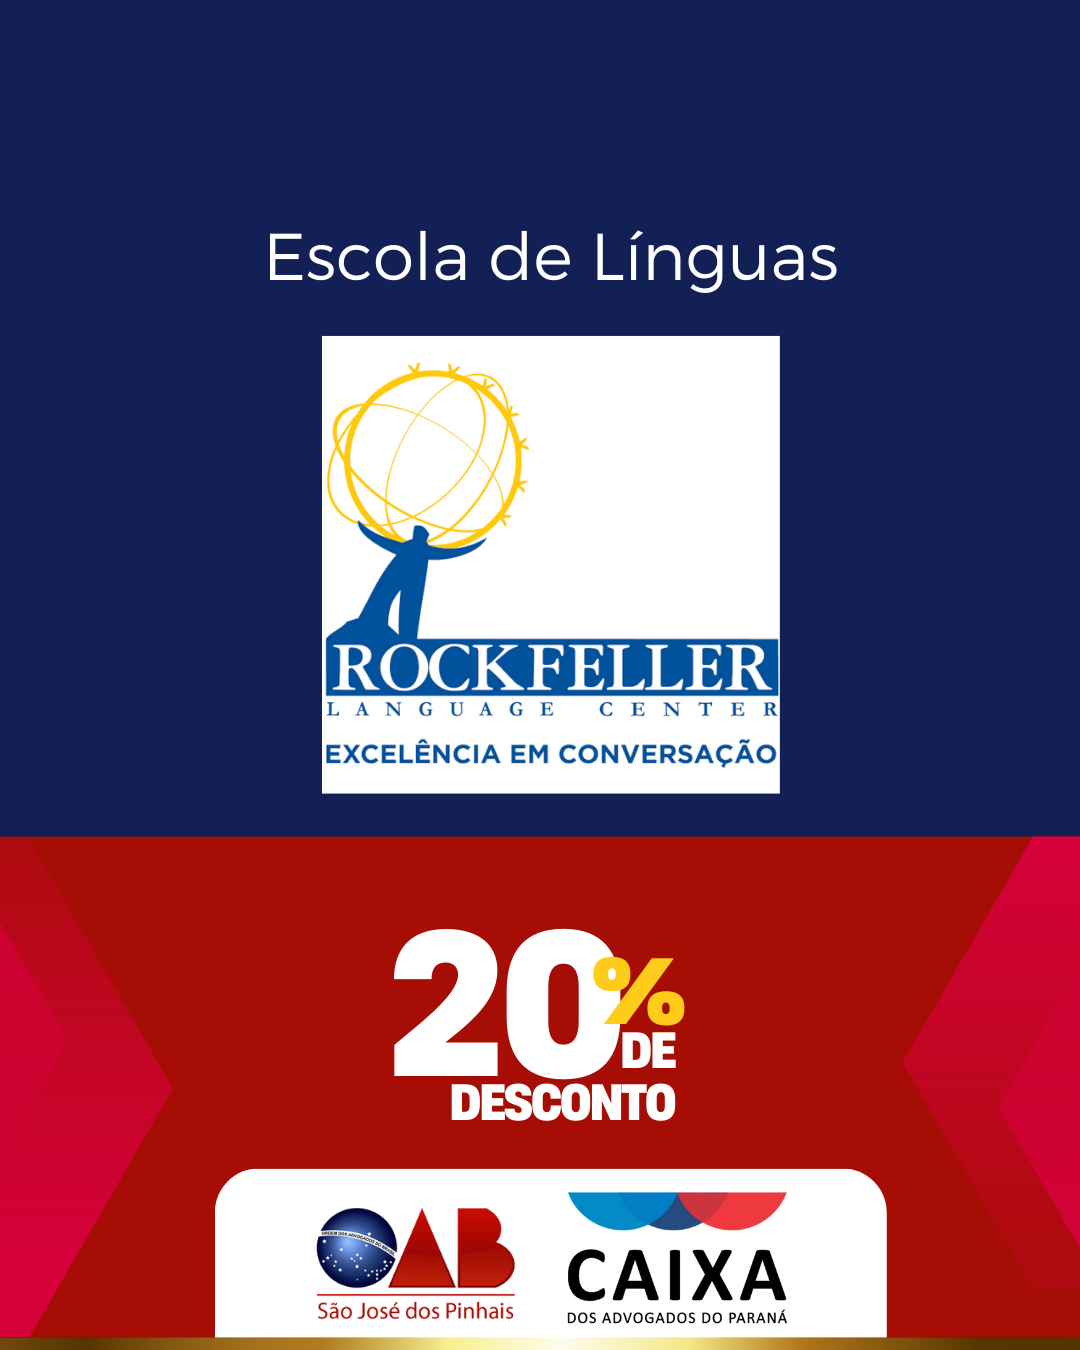 Rockfeller language center